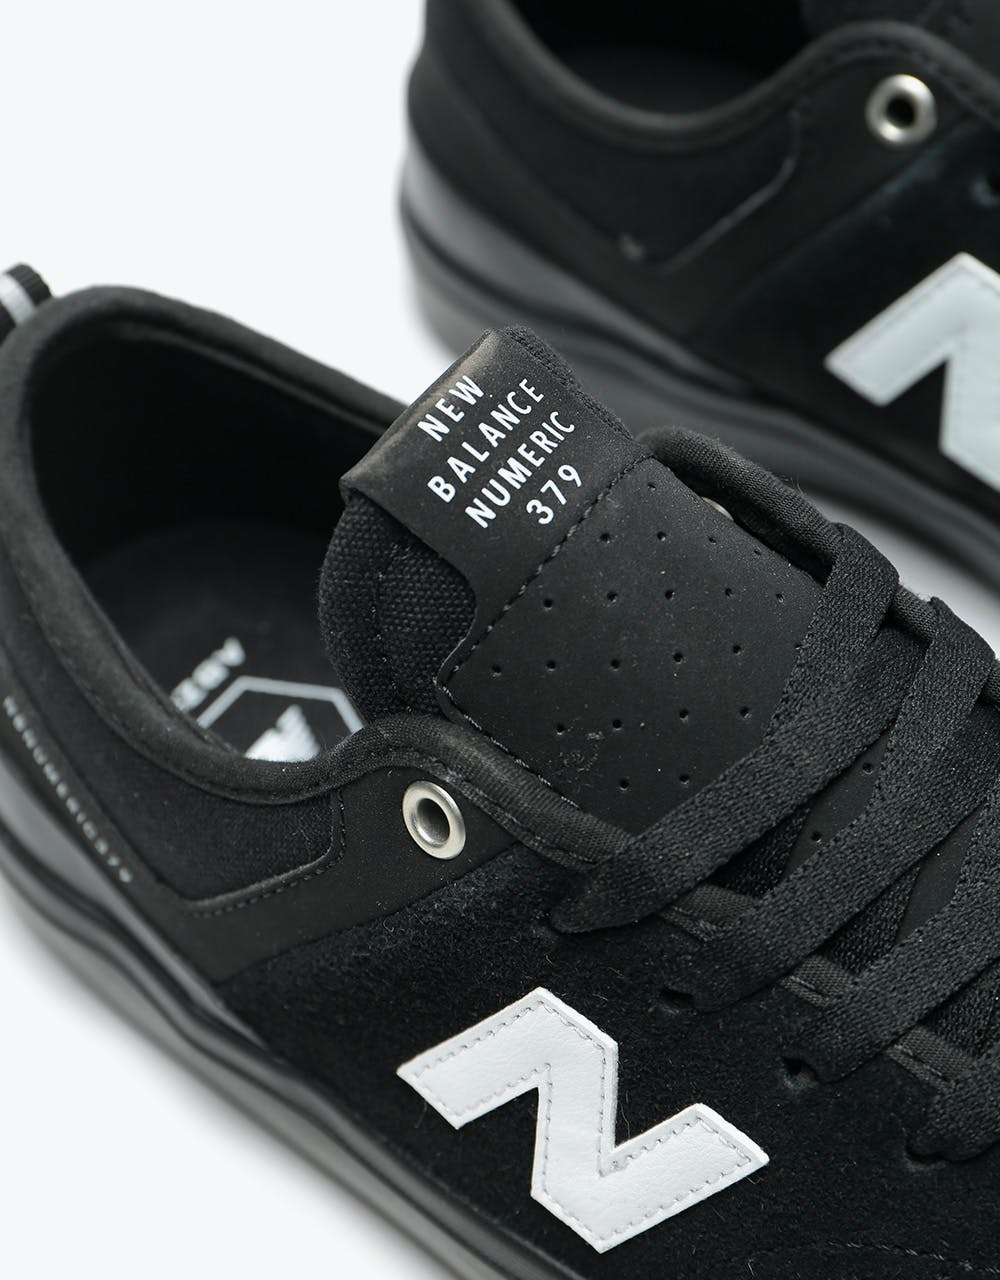 New Balance Numeric 379 Skate Shoes - Black/Black